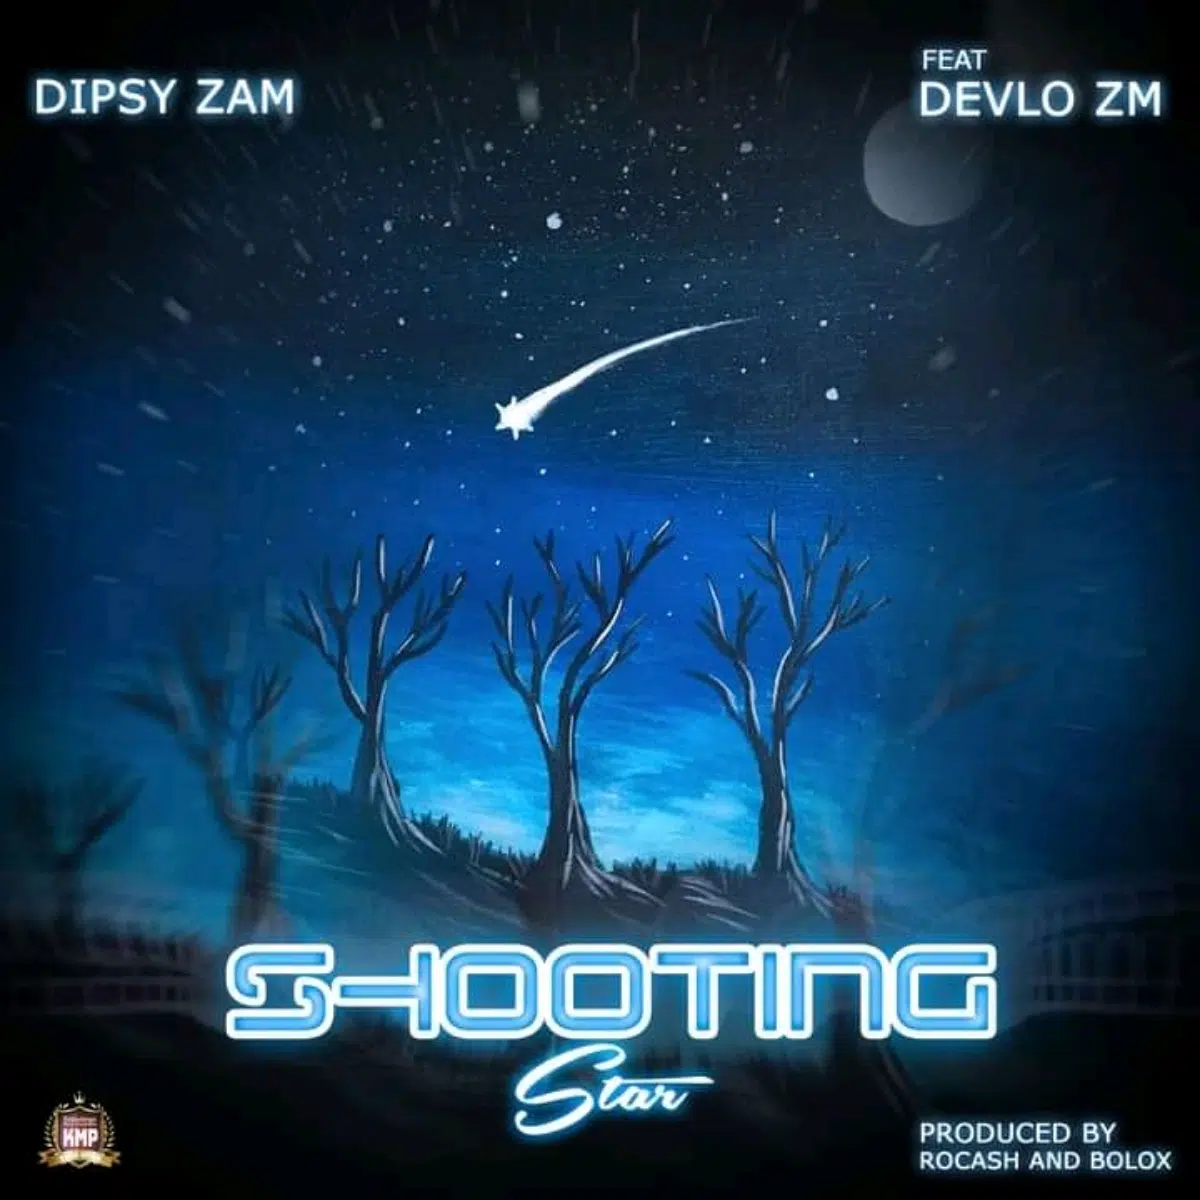 DOWNLOAD: Dipsy Zam Feat Devlo Zam – “Shooting Star” Mp3